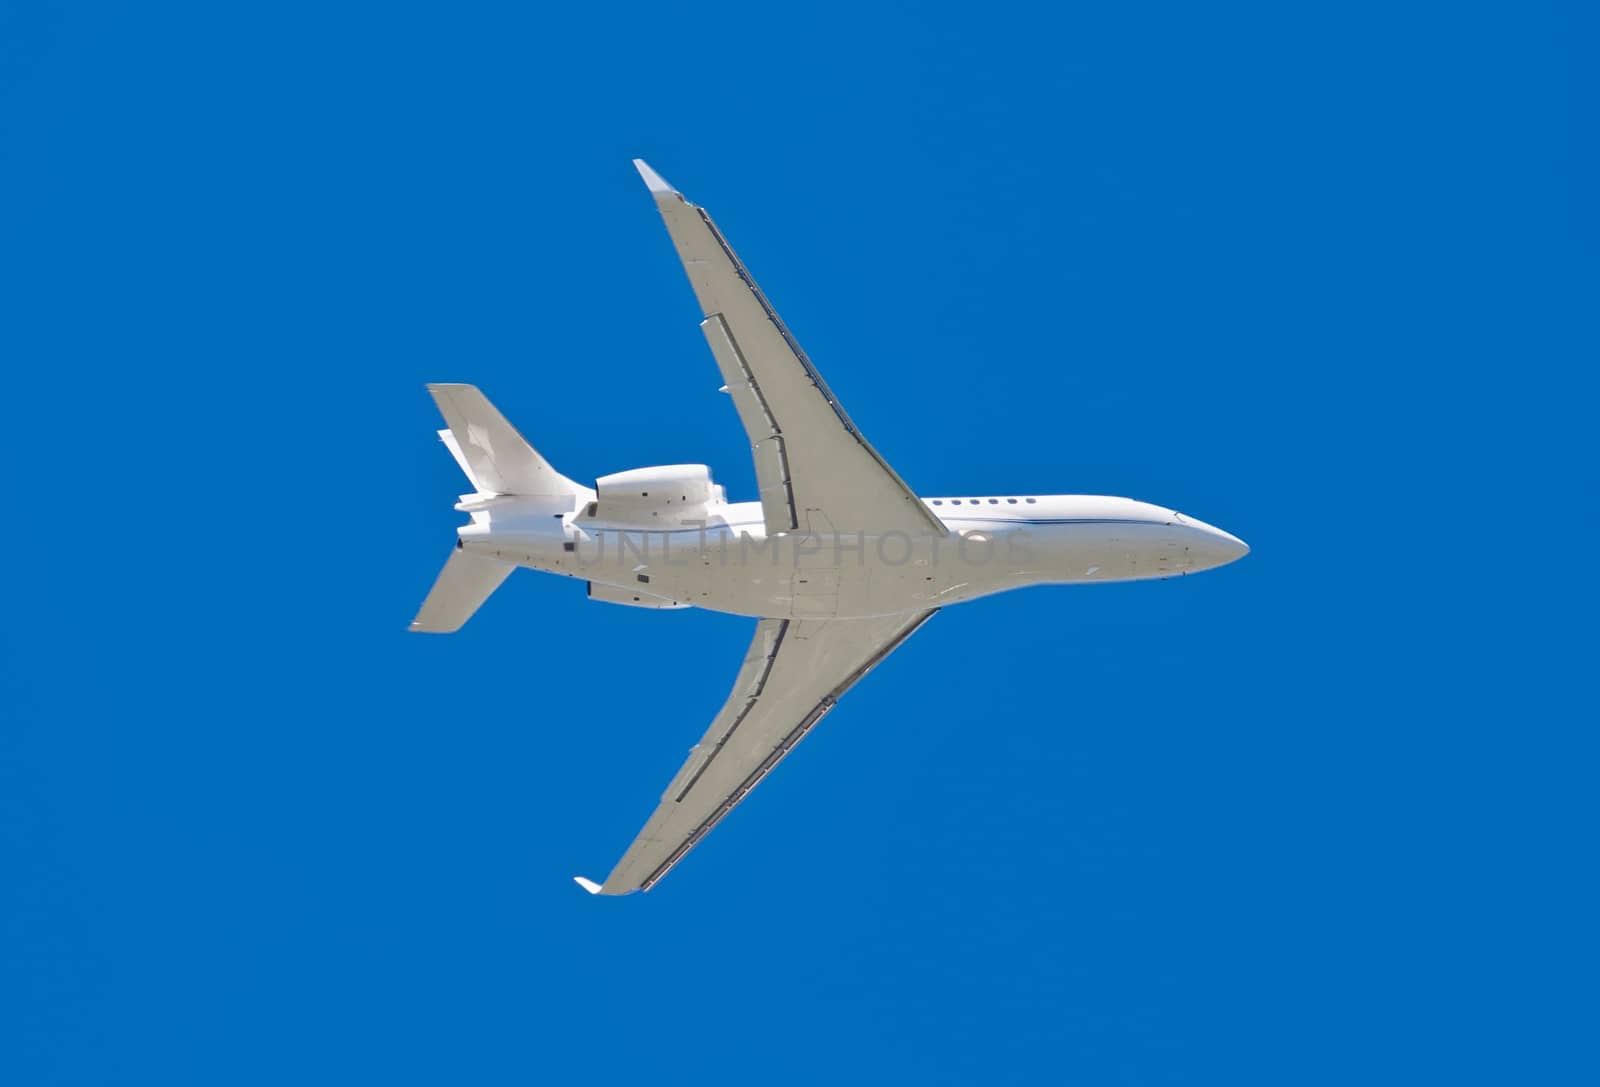 Beautiful white passenger airplane in blue sky